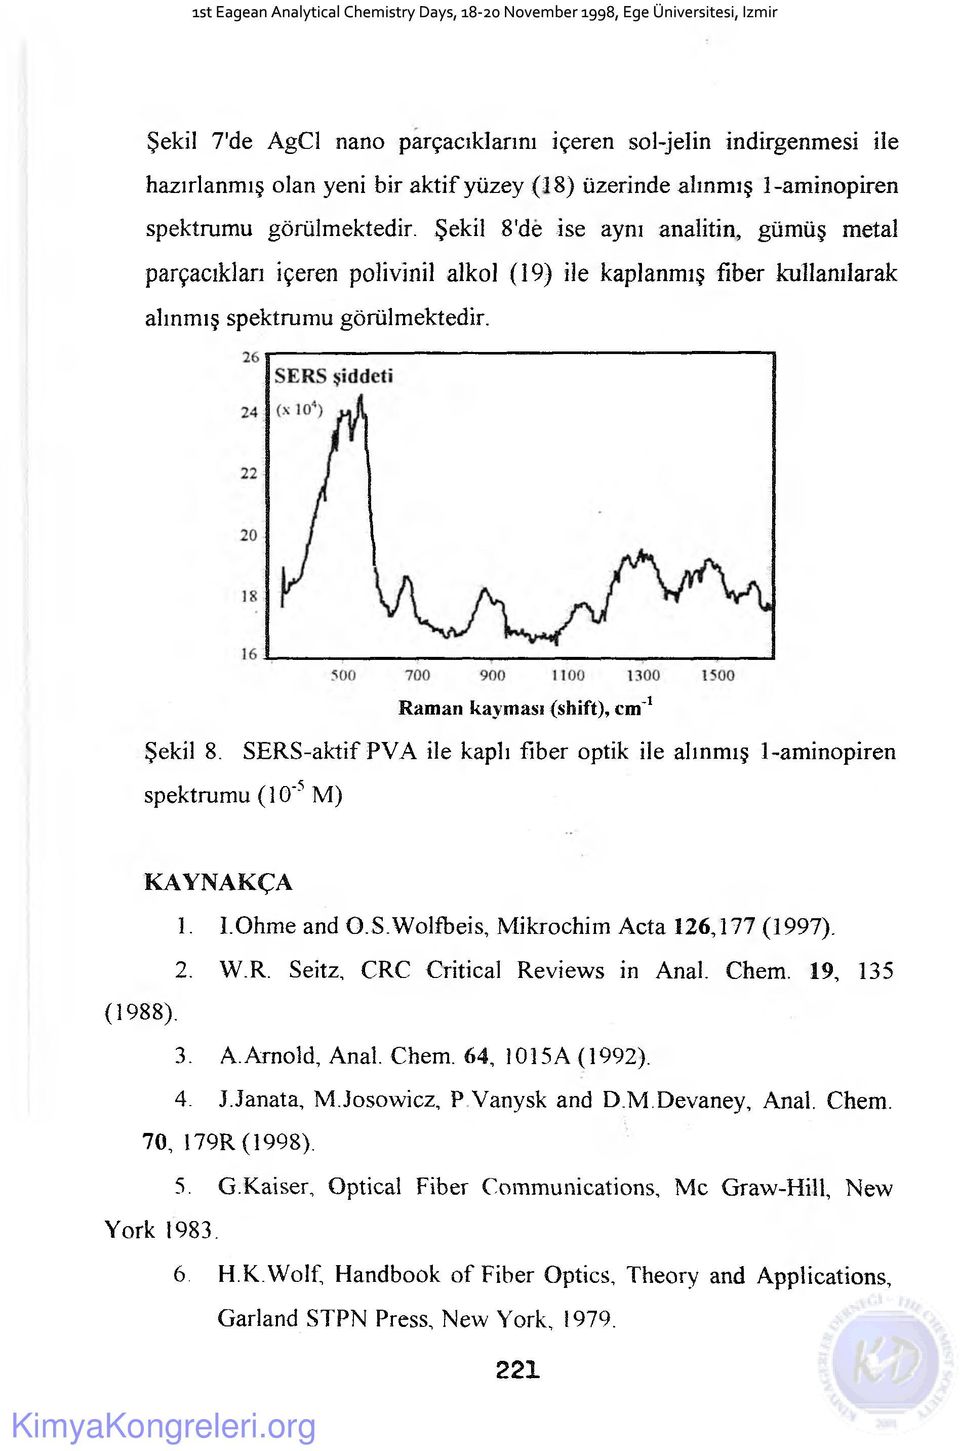 SERS-aktif PVA ile kaplı fiber optik ile alınmış 1-aminopiren spektrumu (10'5 M) KAYNAKÇA î. I.Ohme and O.S.Wolfbeis, Mikrochim Acta 126,177 (1997). 2. W.R. Seitz, CRC Critical Reviews in Anal. Chem.